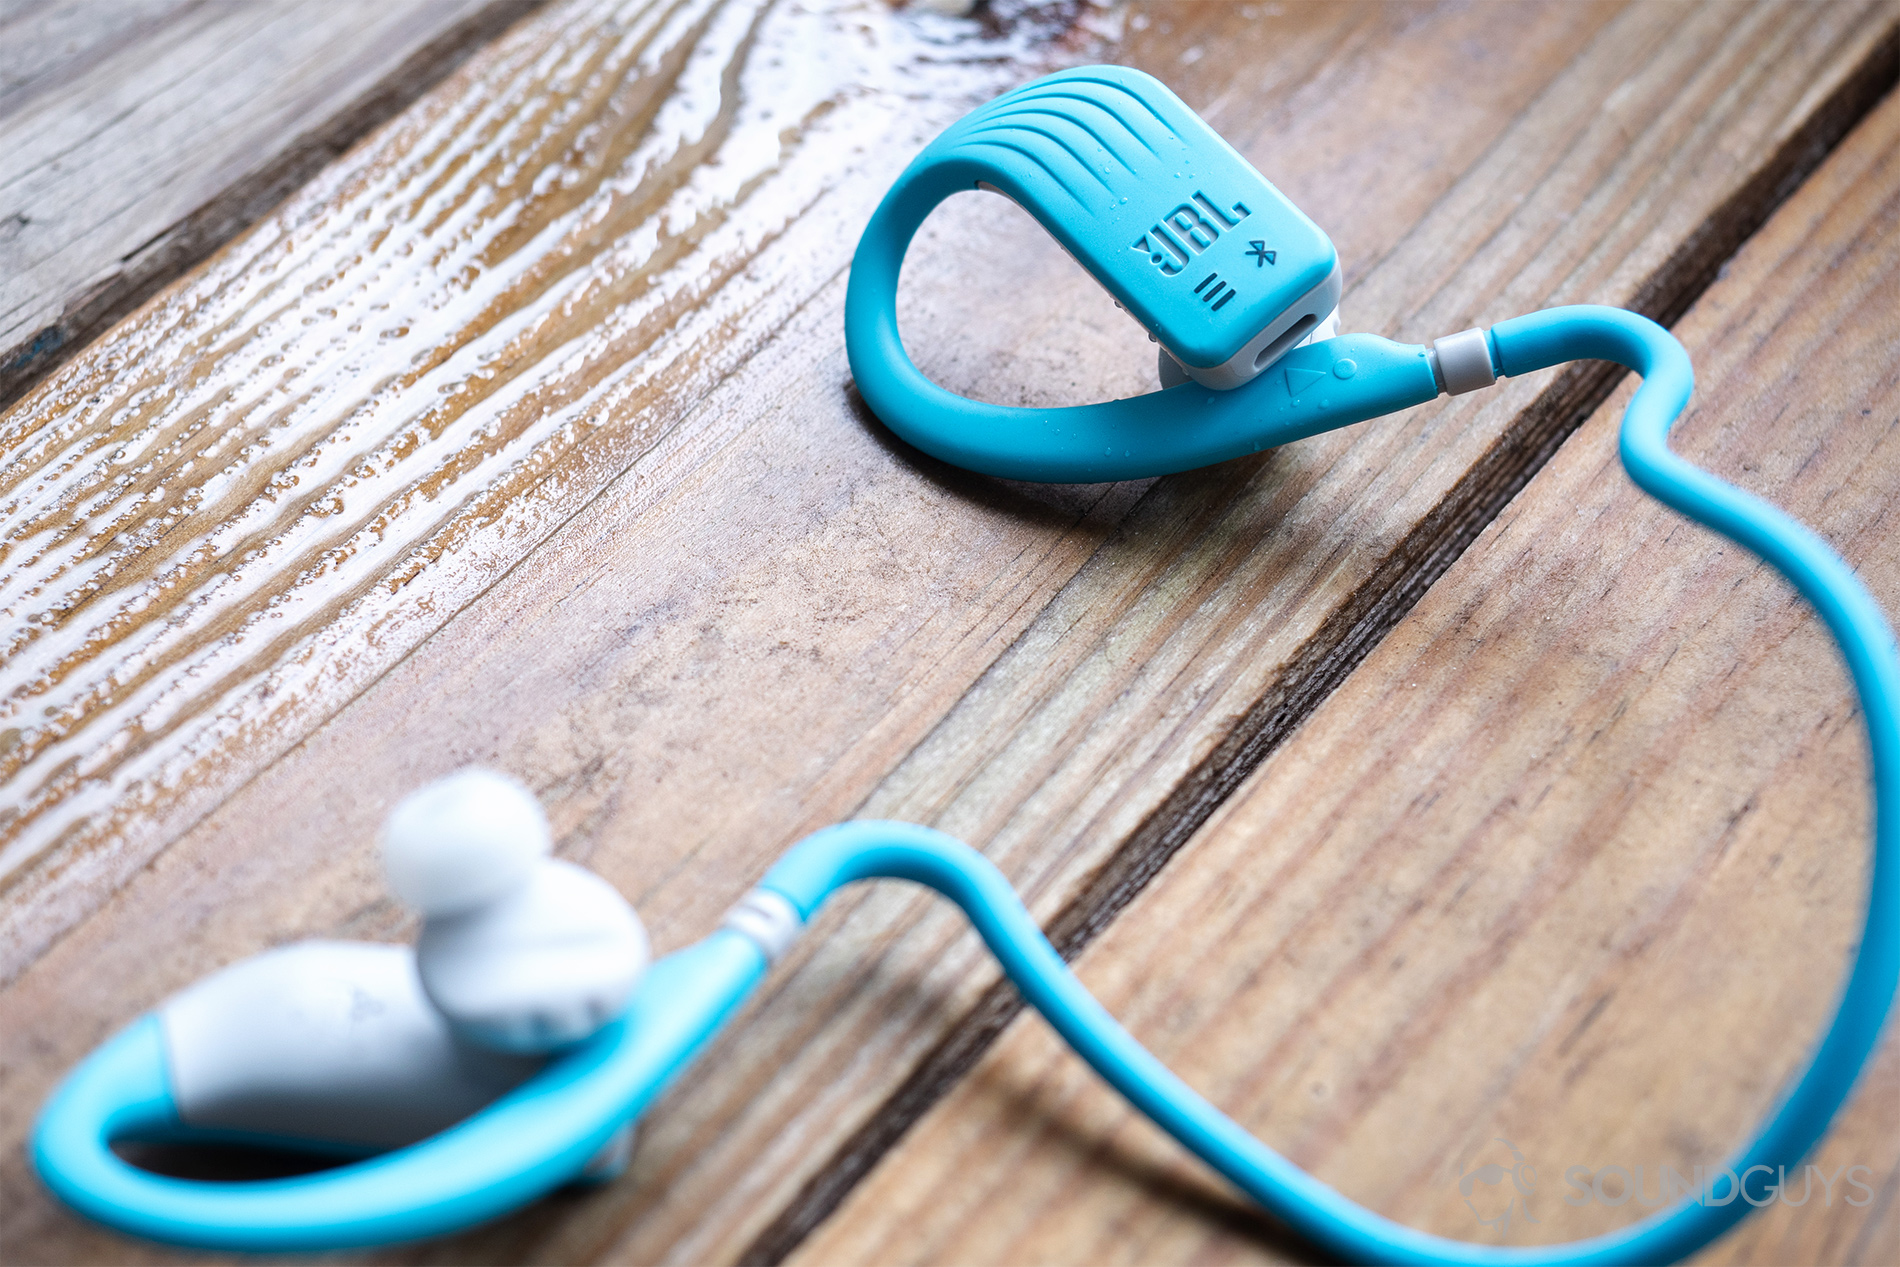 JBL Endurance Dive: The headphones on a wet wooden surface.